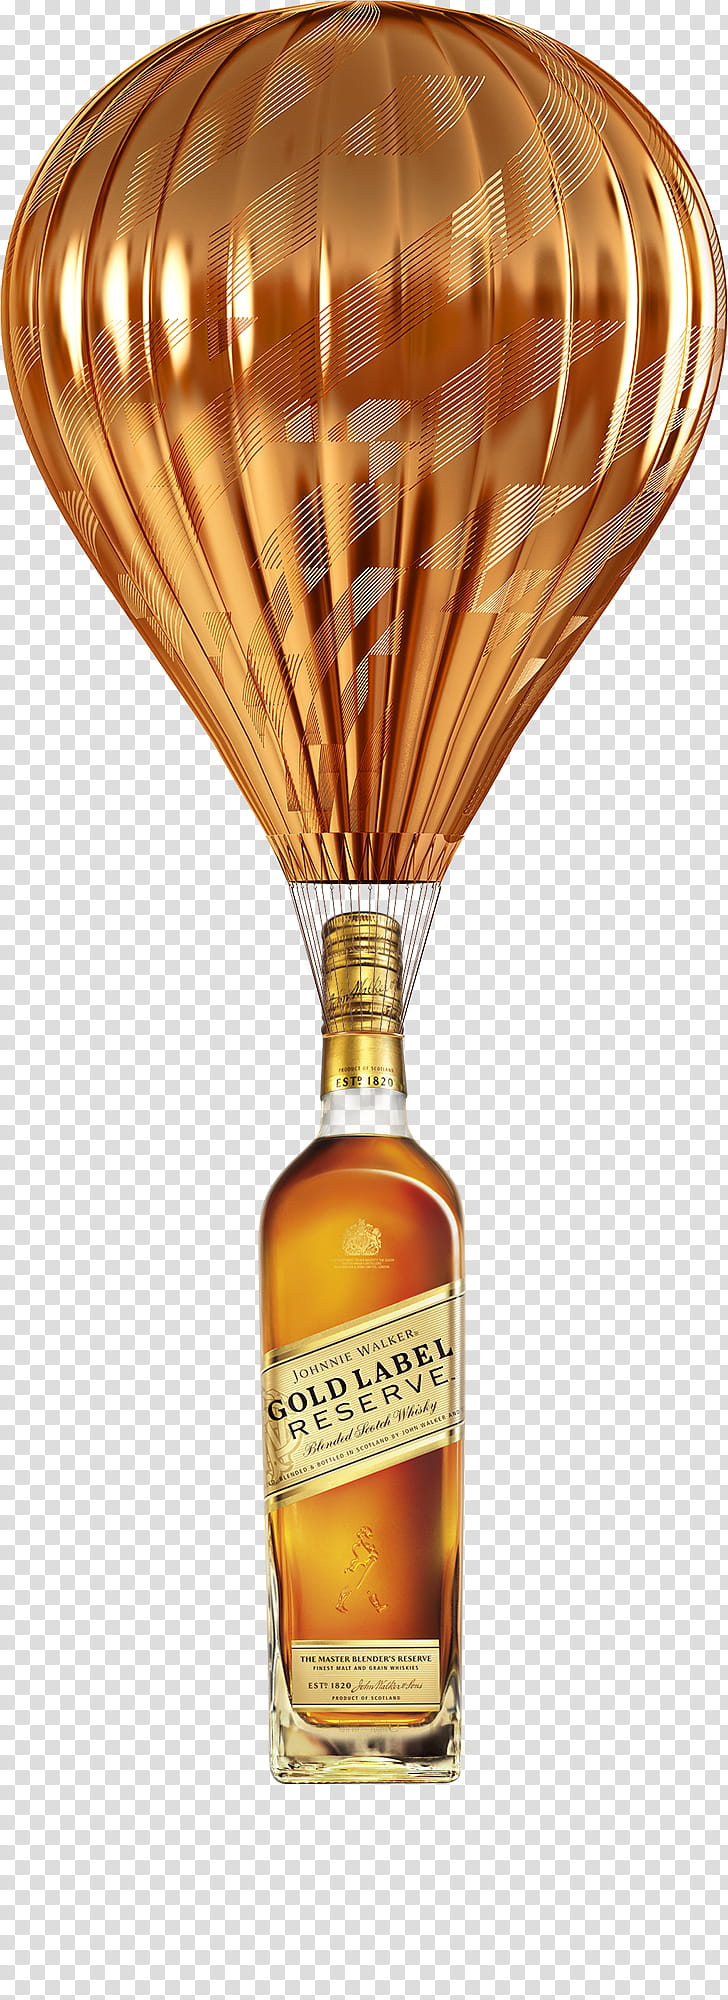 Gold Bottle, Whiskey, Johnnie Walker, Blended Whiskey, Johnnie Walker Label, Scotch Whisky, Johnnie Walker Gold Label Reserve Blended Whisky, Liqueur transparent background PNG clipart